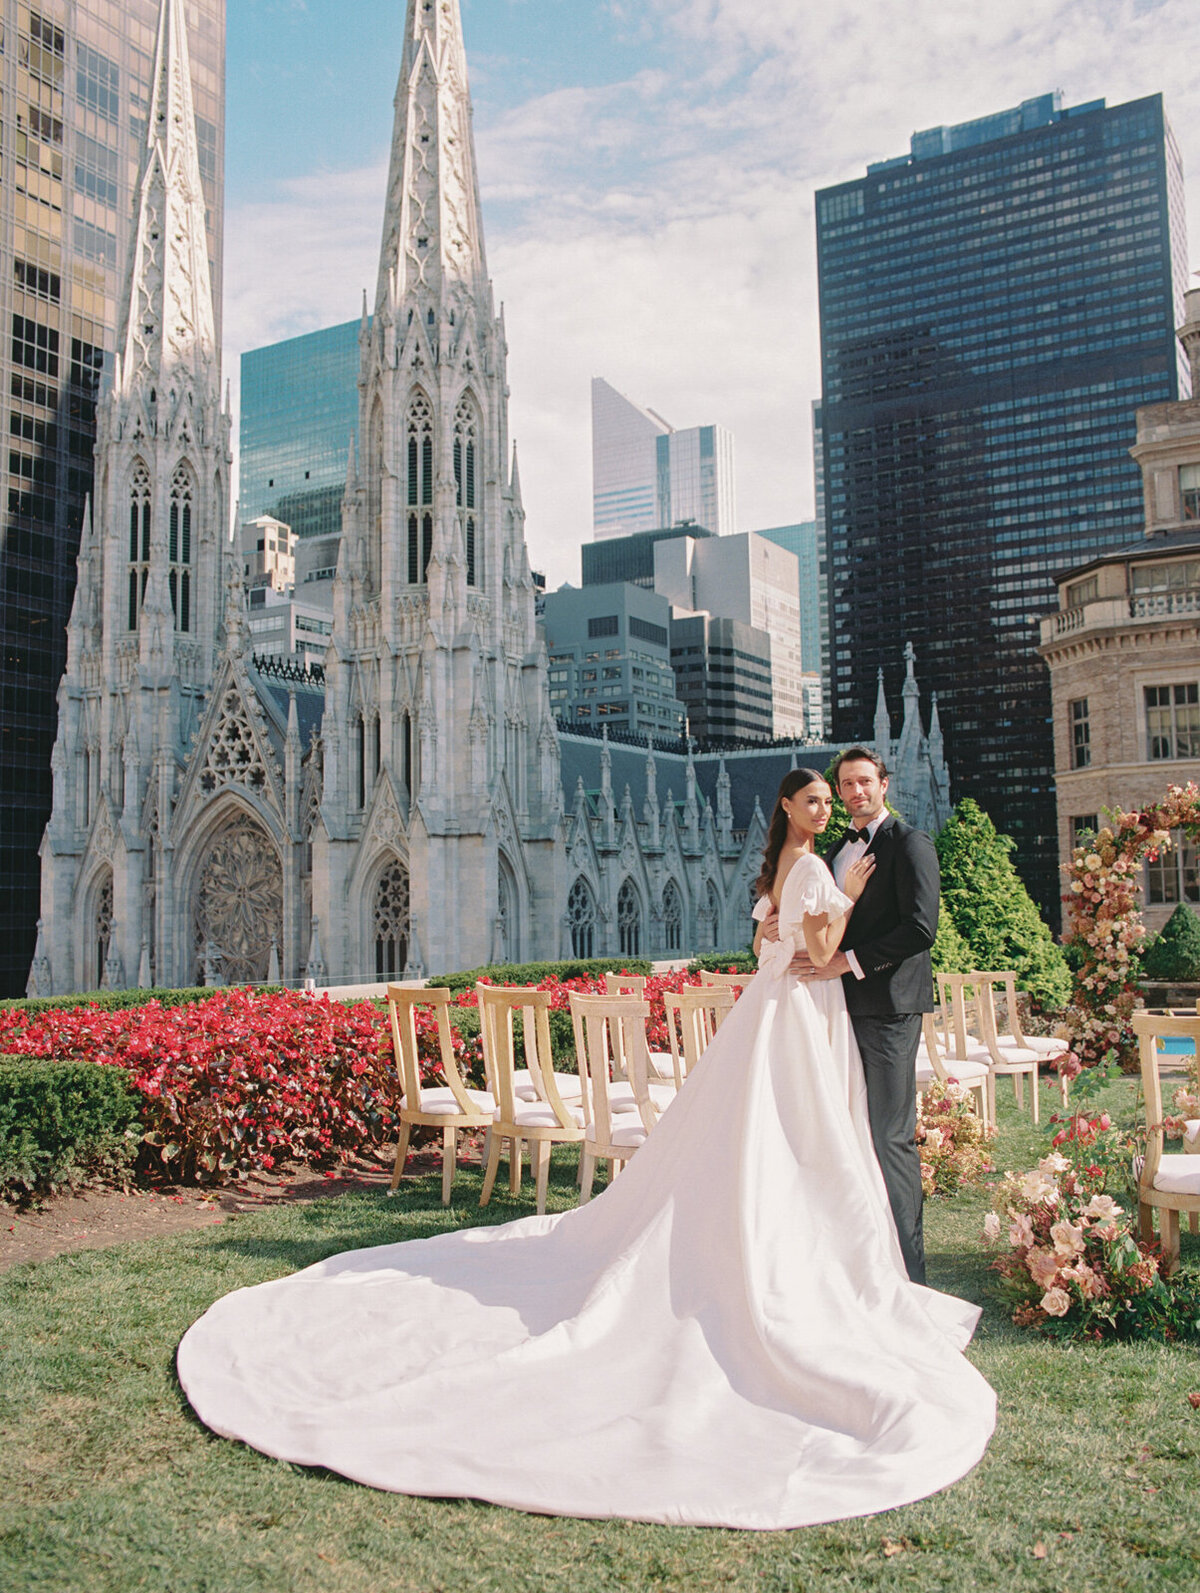 620 Loft & Garden Private Penthouse Wedding - New York City - Stephanie Michelle Photography - Britt Jones Co-123